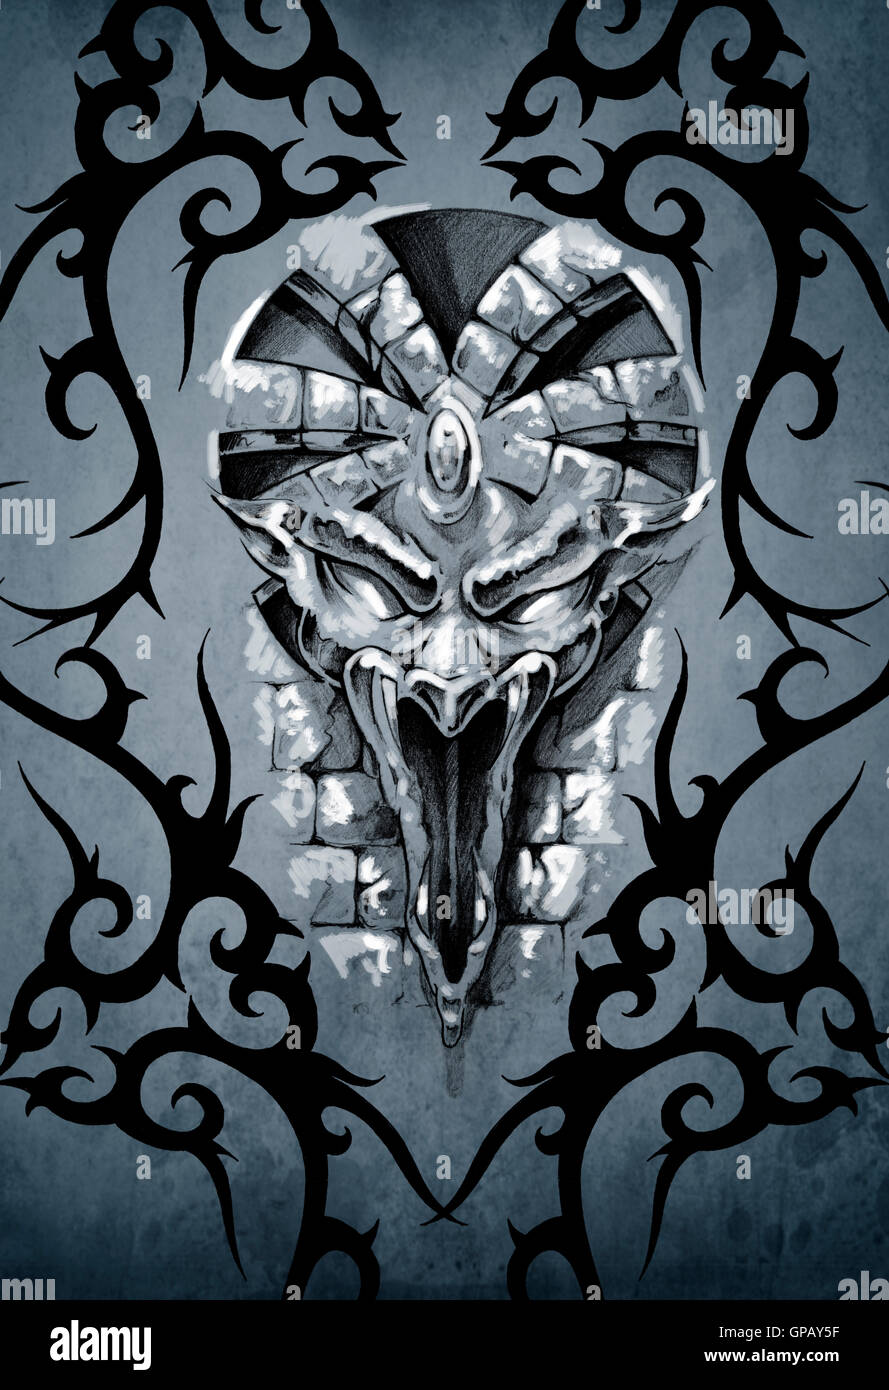 Gargoyle, fantasy illustration, tattoo concept Stock Photo